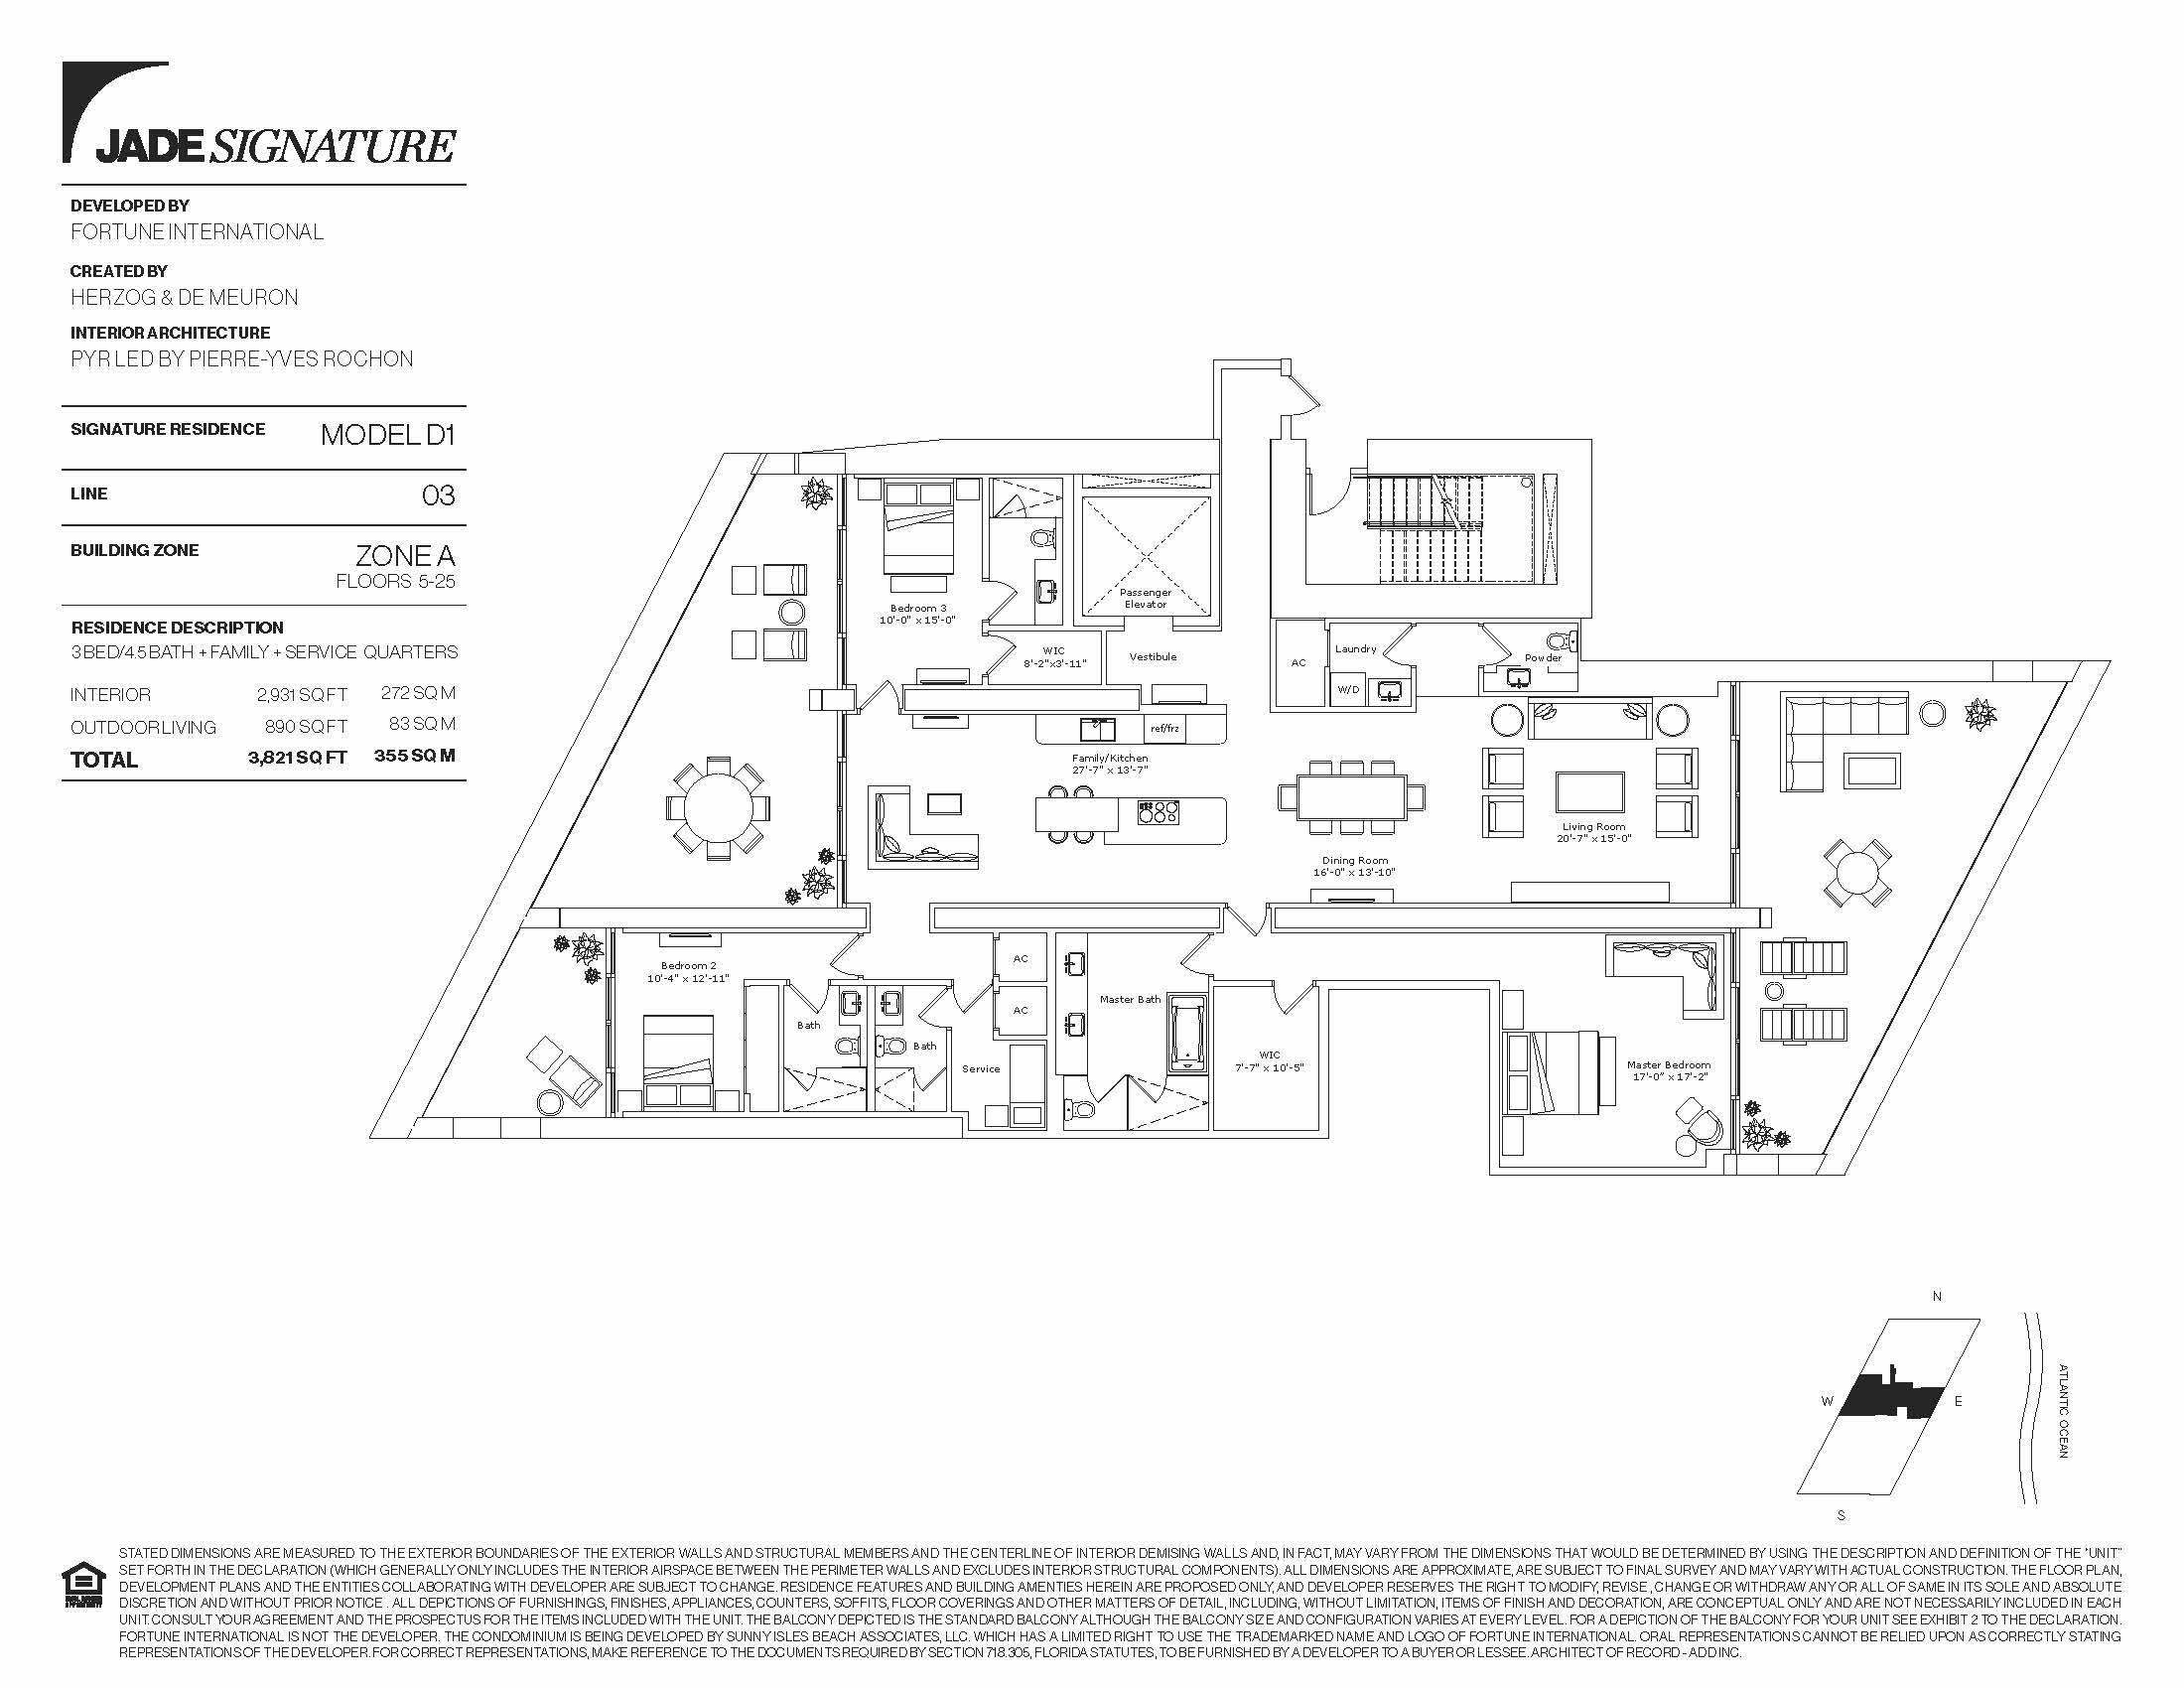 Floor Plan for Jade Signature Sunny Isles Floorplans, Model D1